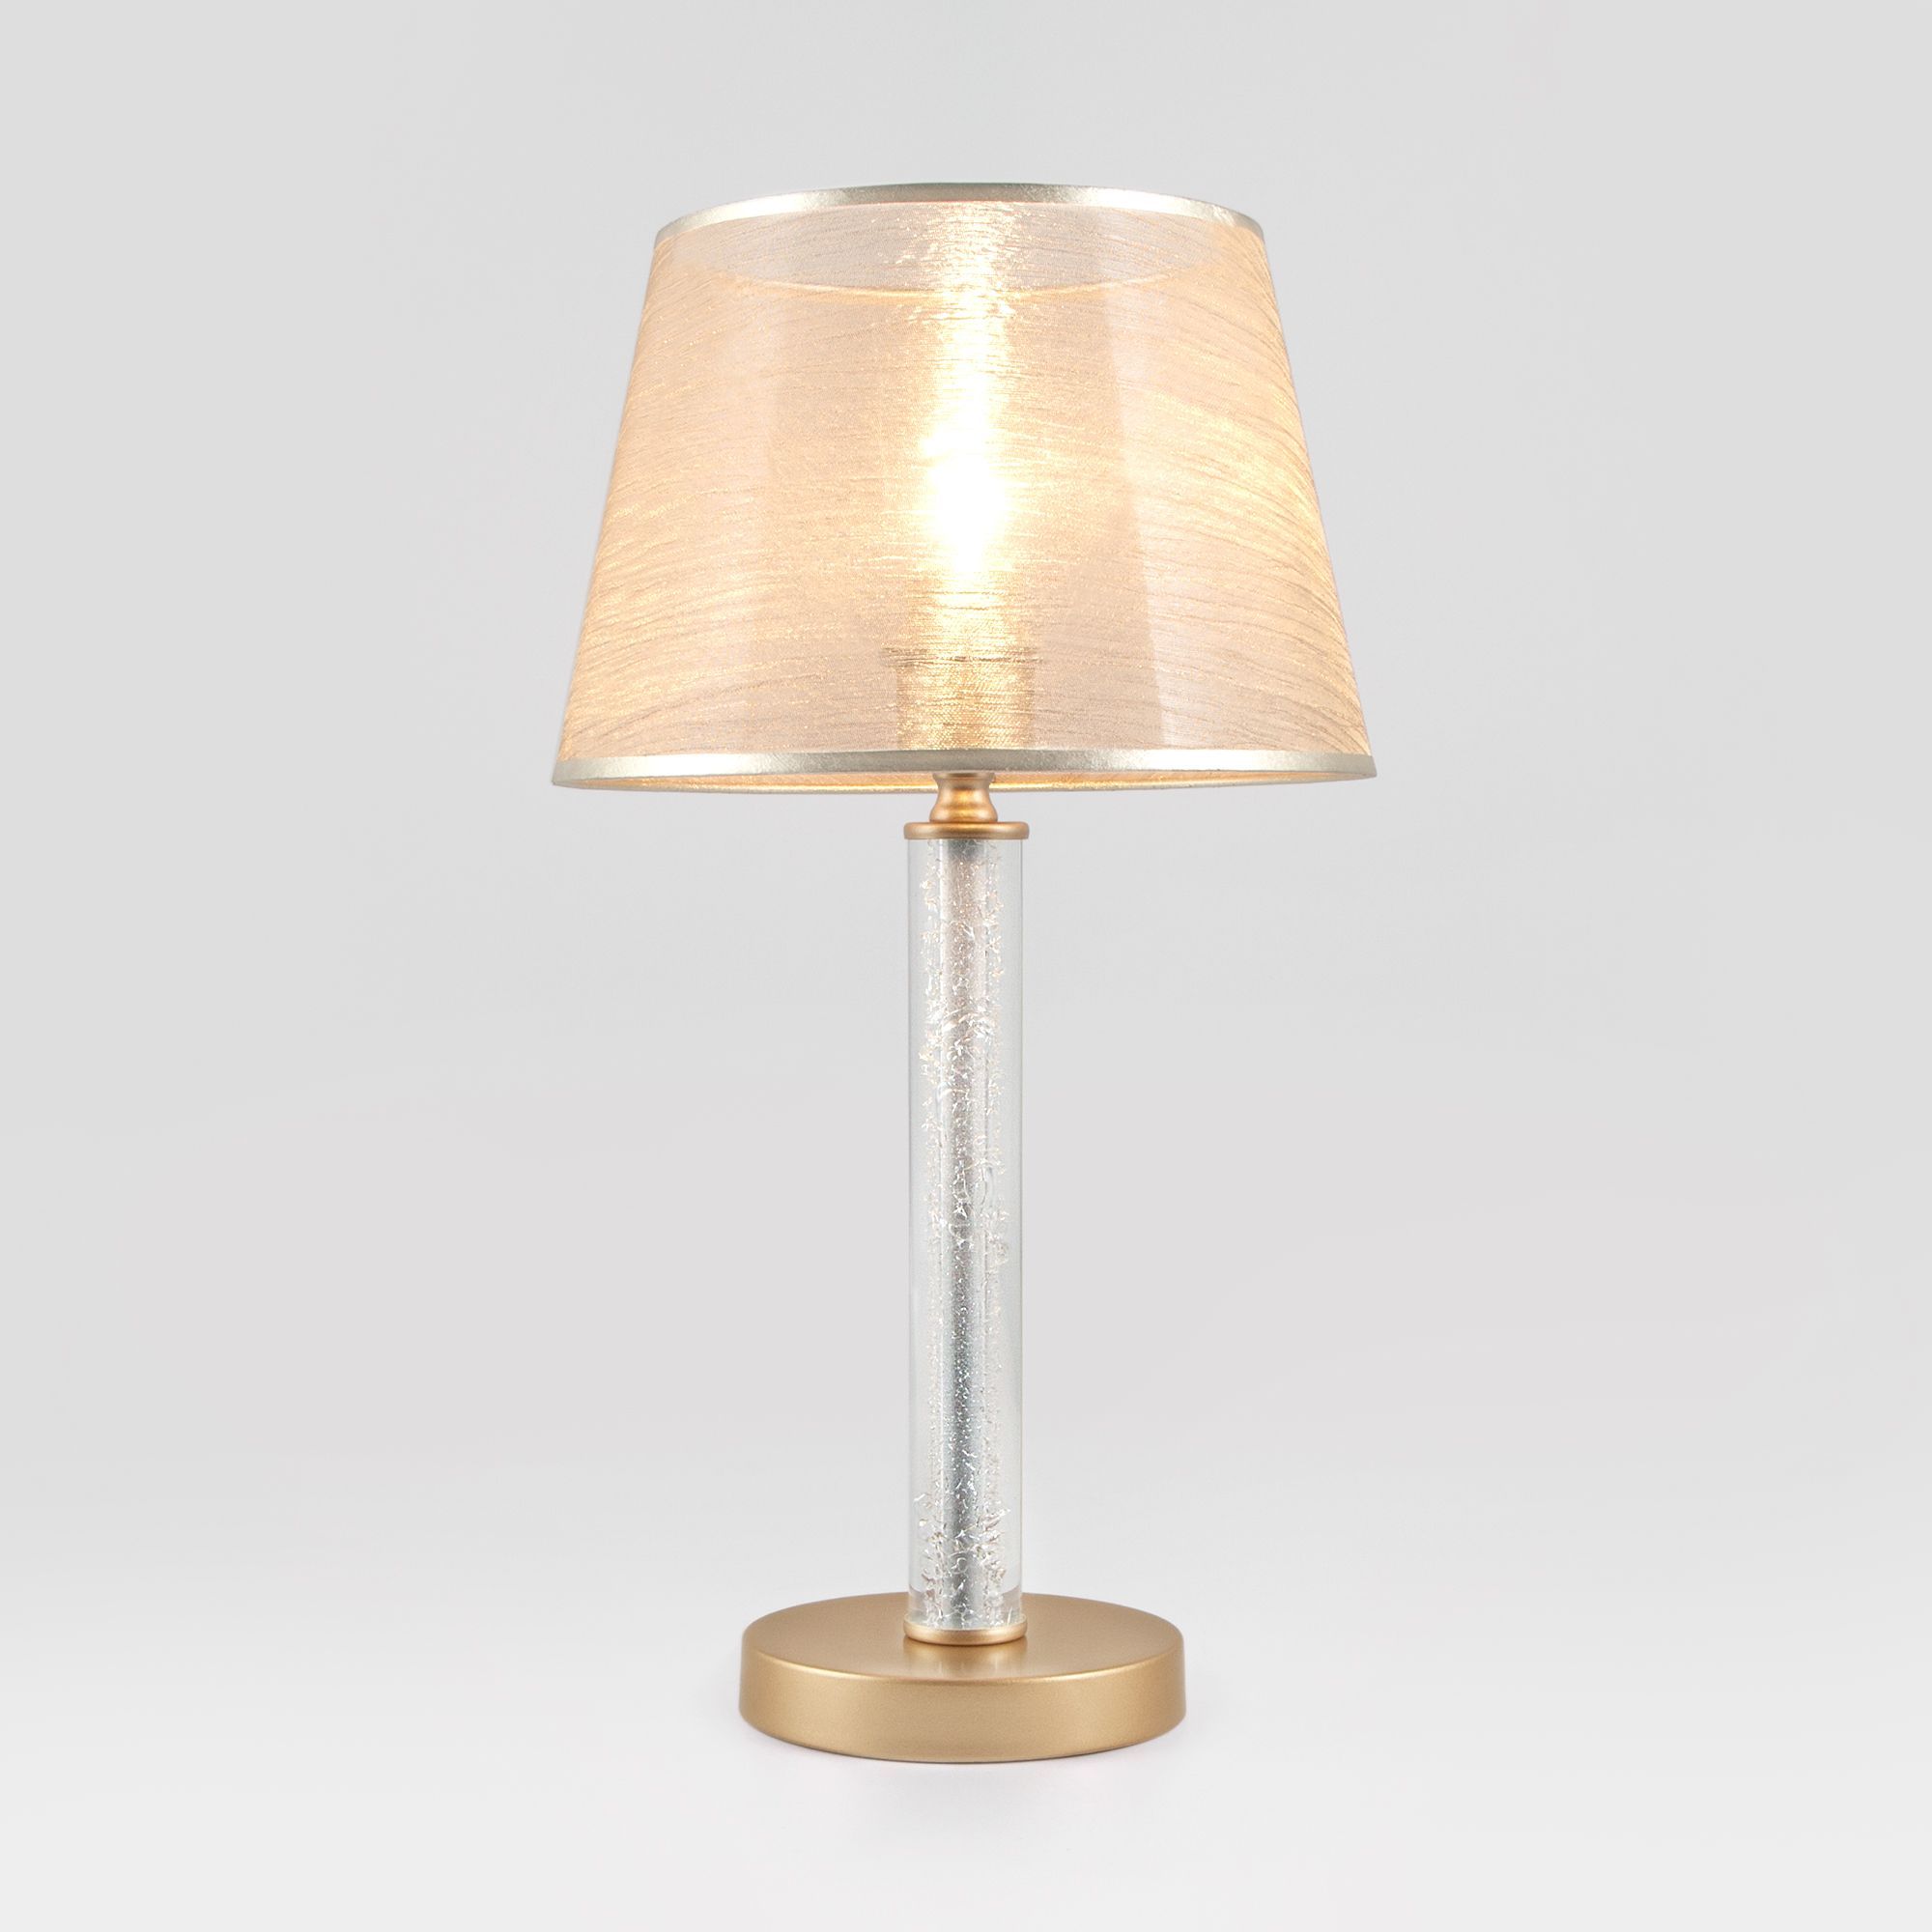 Настольная лампа с абажуром 01075/1 перламутровое золото  Eurosvet - Фото 4